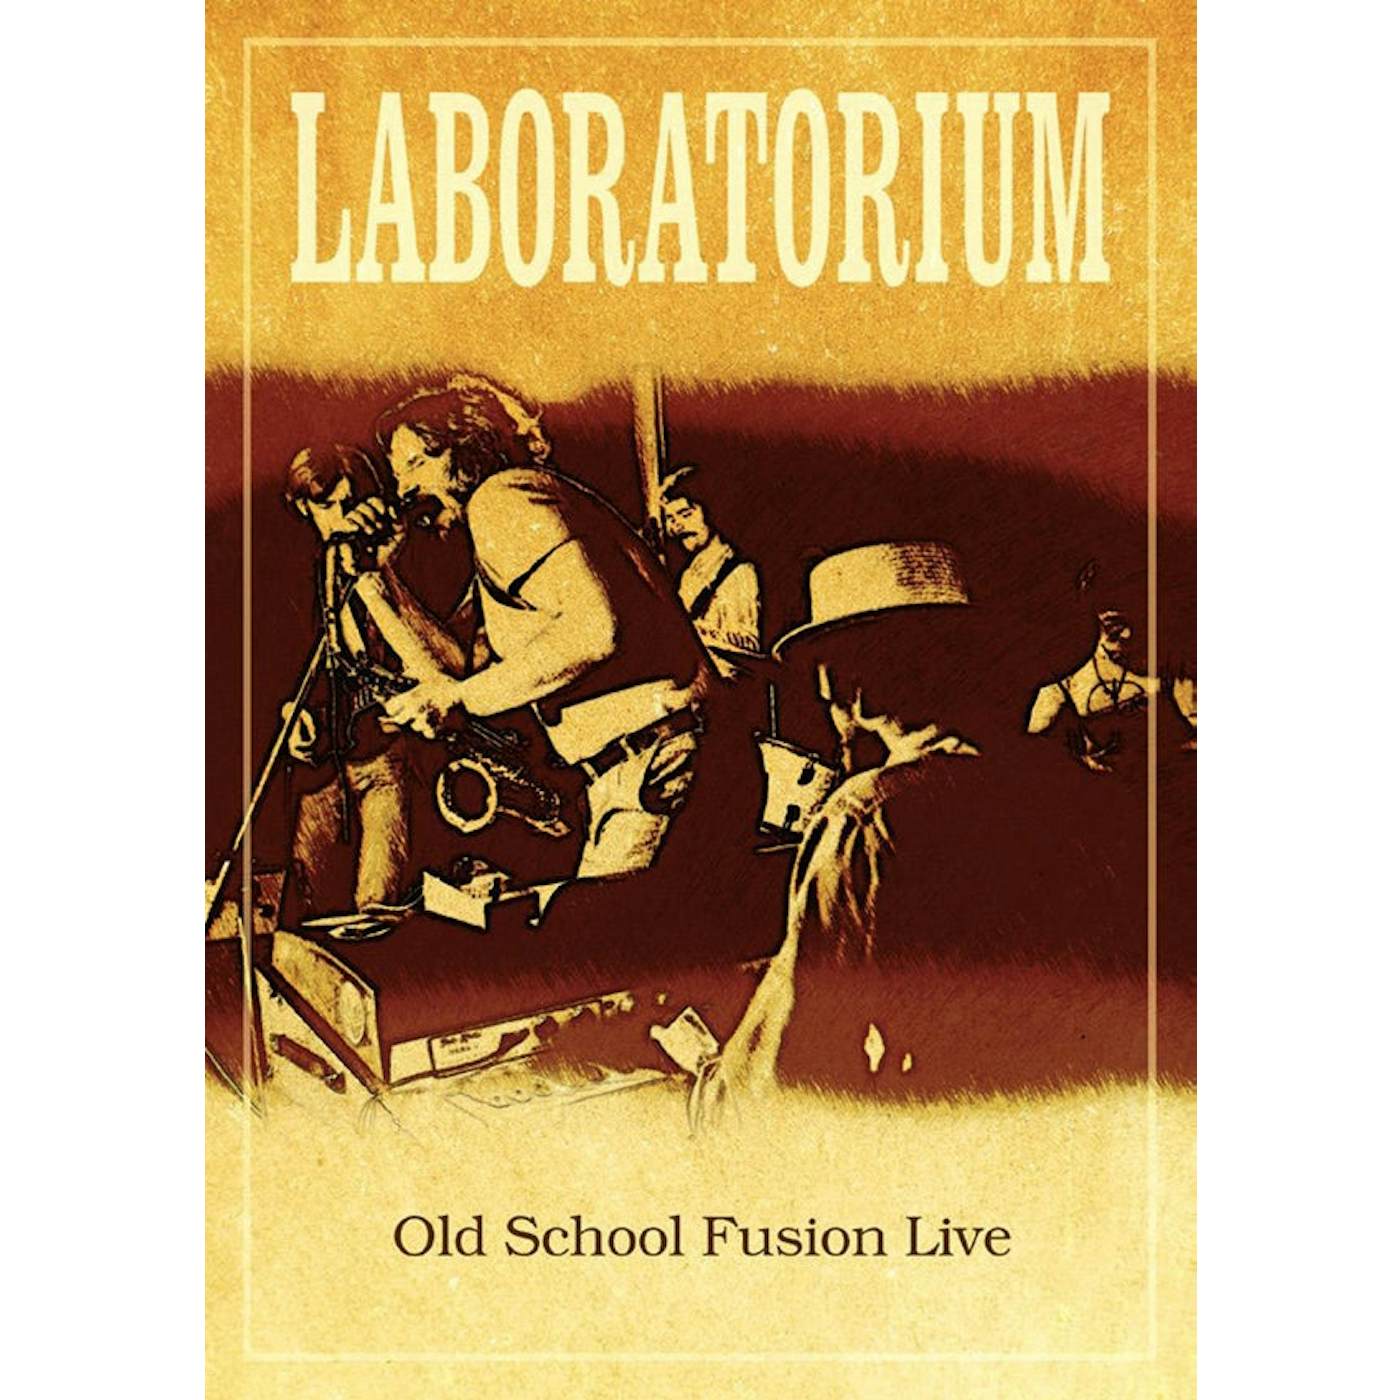 Laboratorium DVD - Old School Fusion Live